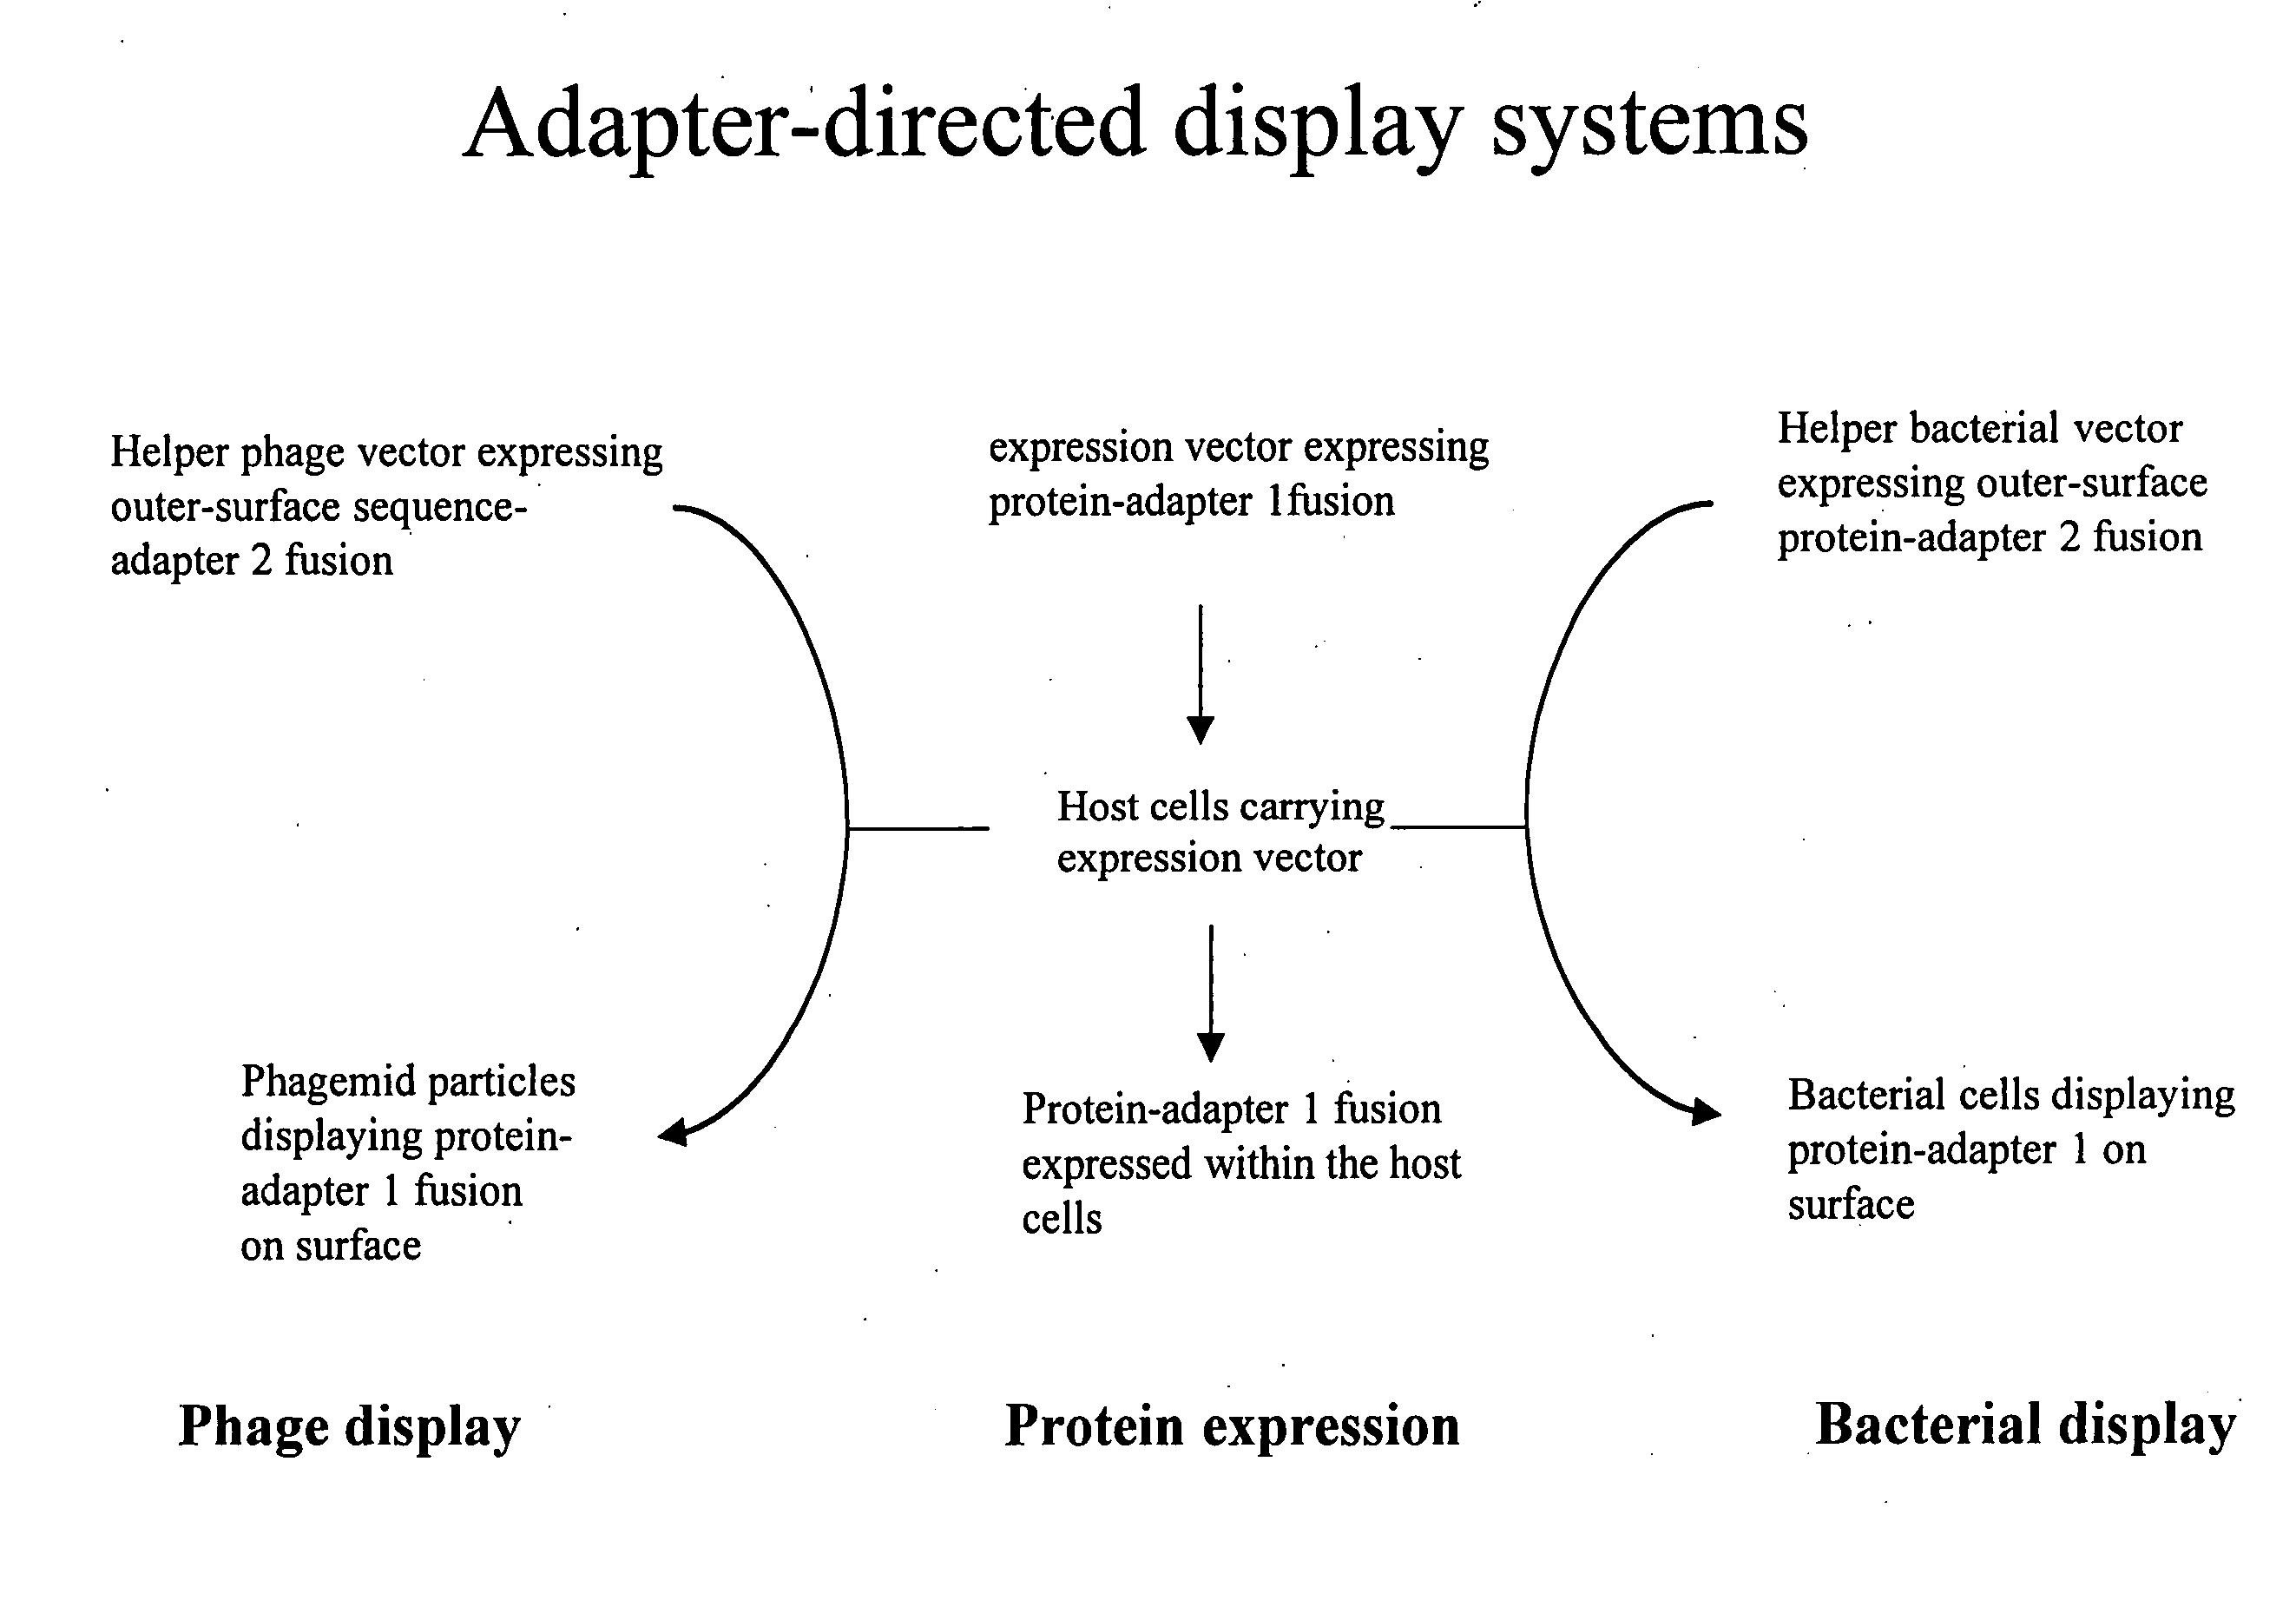 Adaptor-directed helper systems